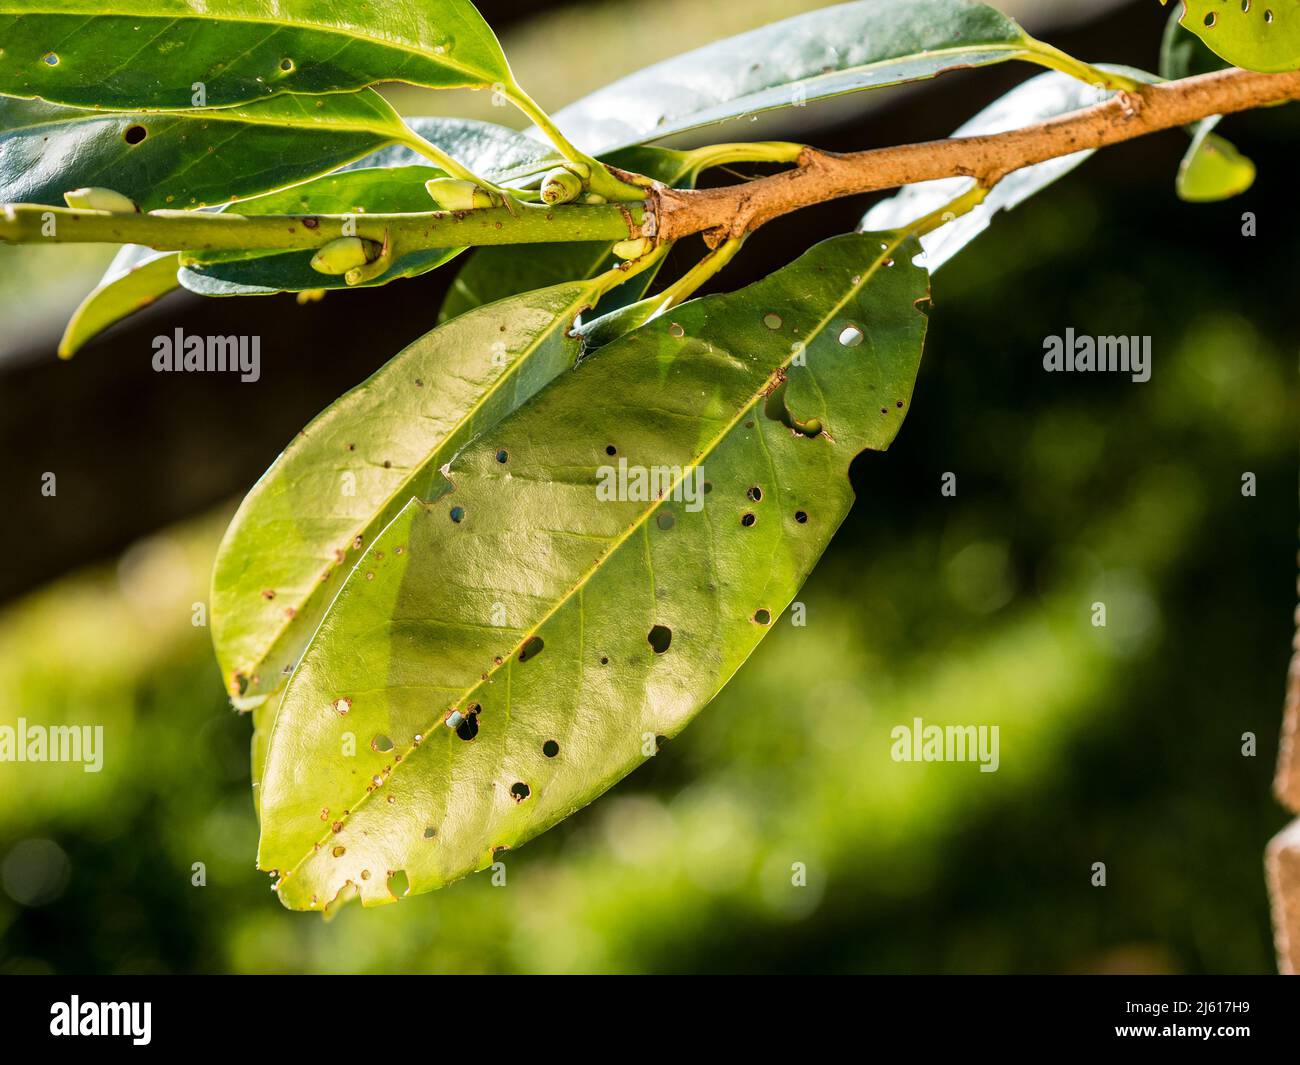 Leaves of cherry laurel Prunus laurocerasus affected by leaf spot fungi Stigmina carpophila Stock Photo